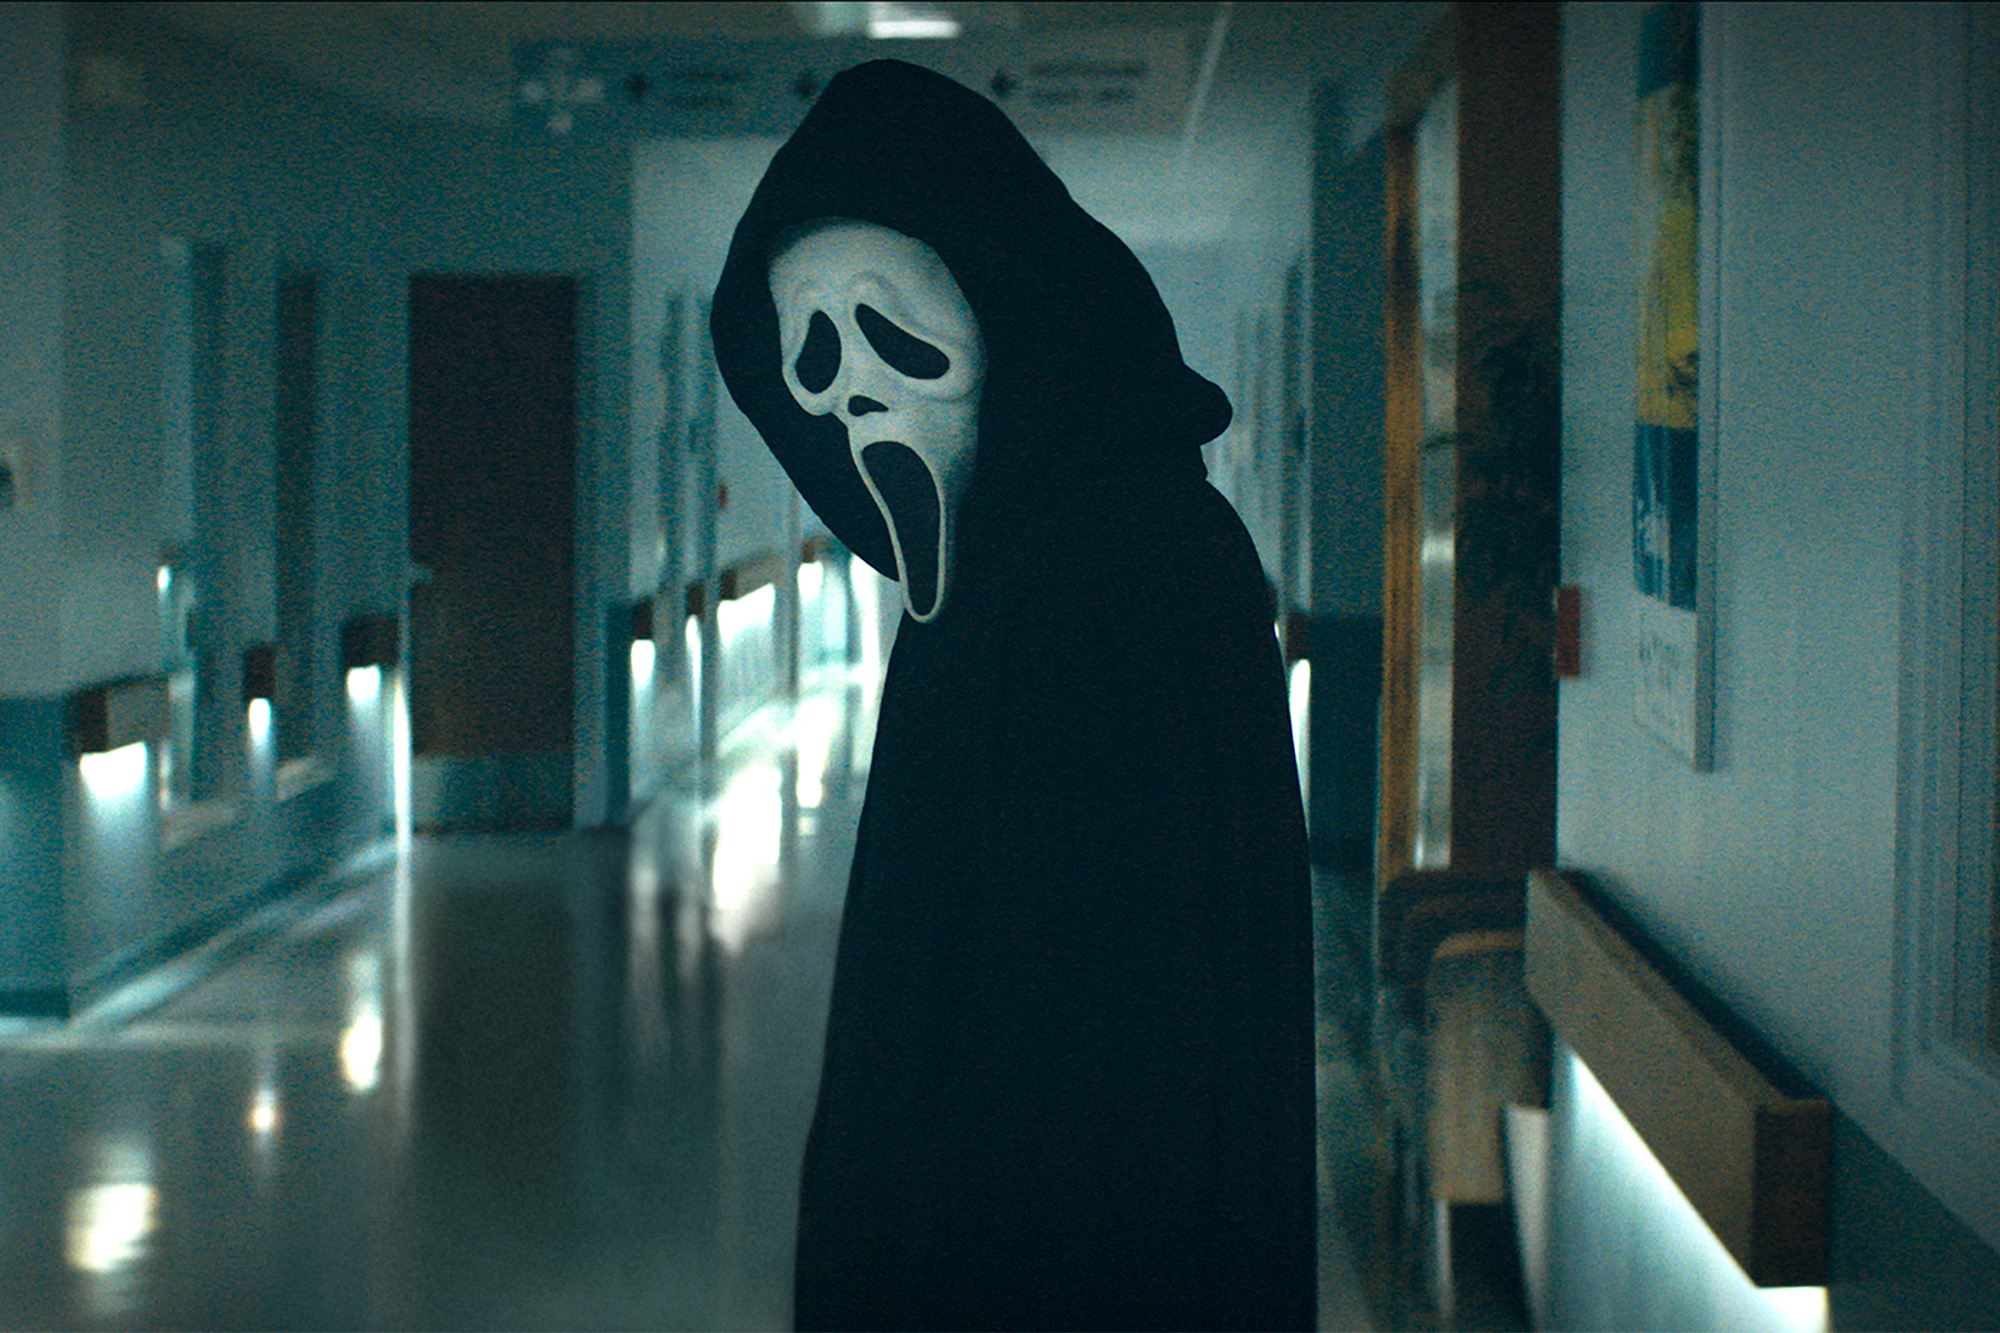 New ‘Scream’ movie provides plenty of jump-scares